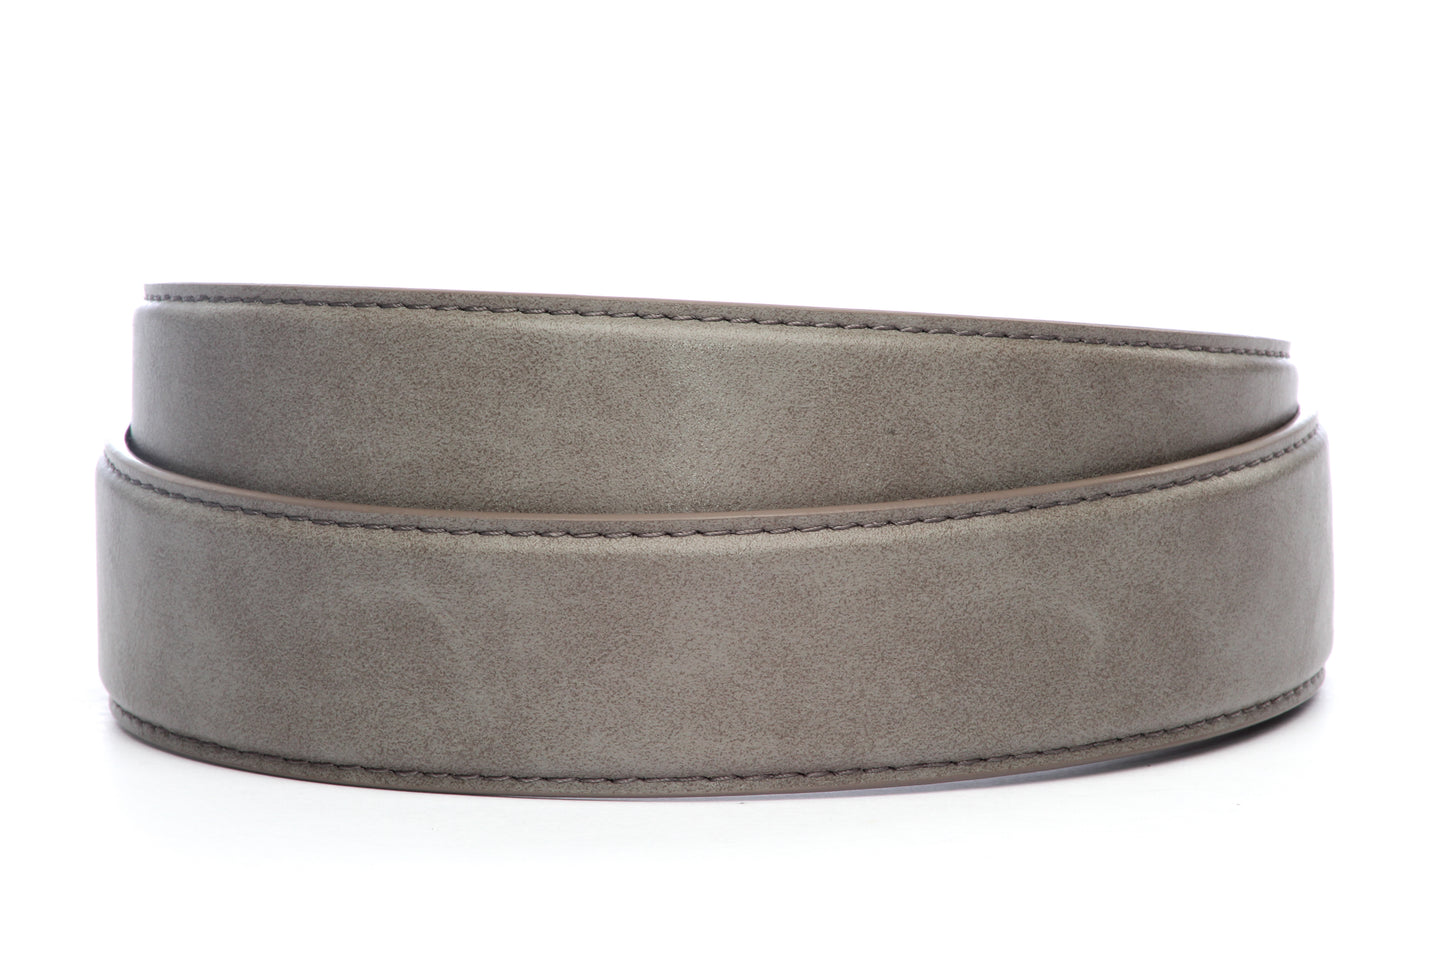 Men's XL vegan microfiber belt strap in shark grey, 1.5 inches wide, formal look